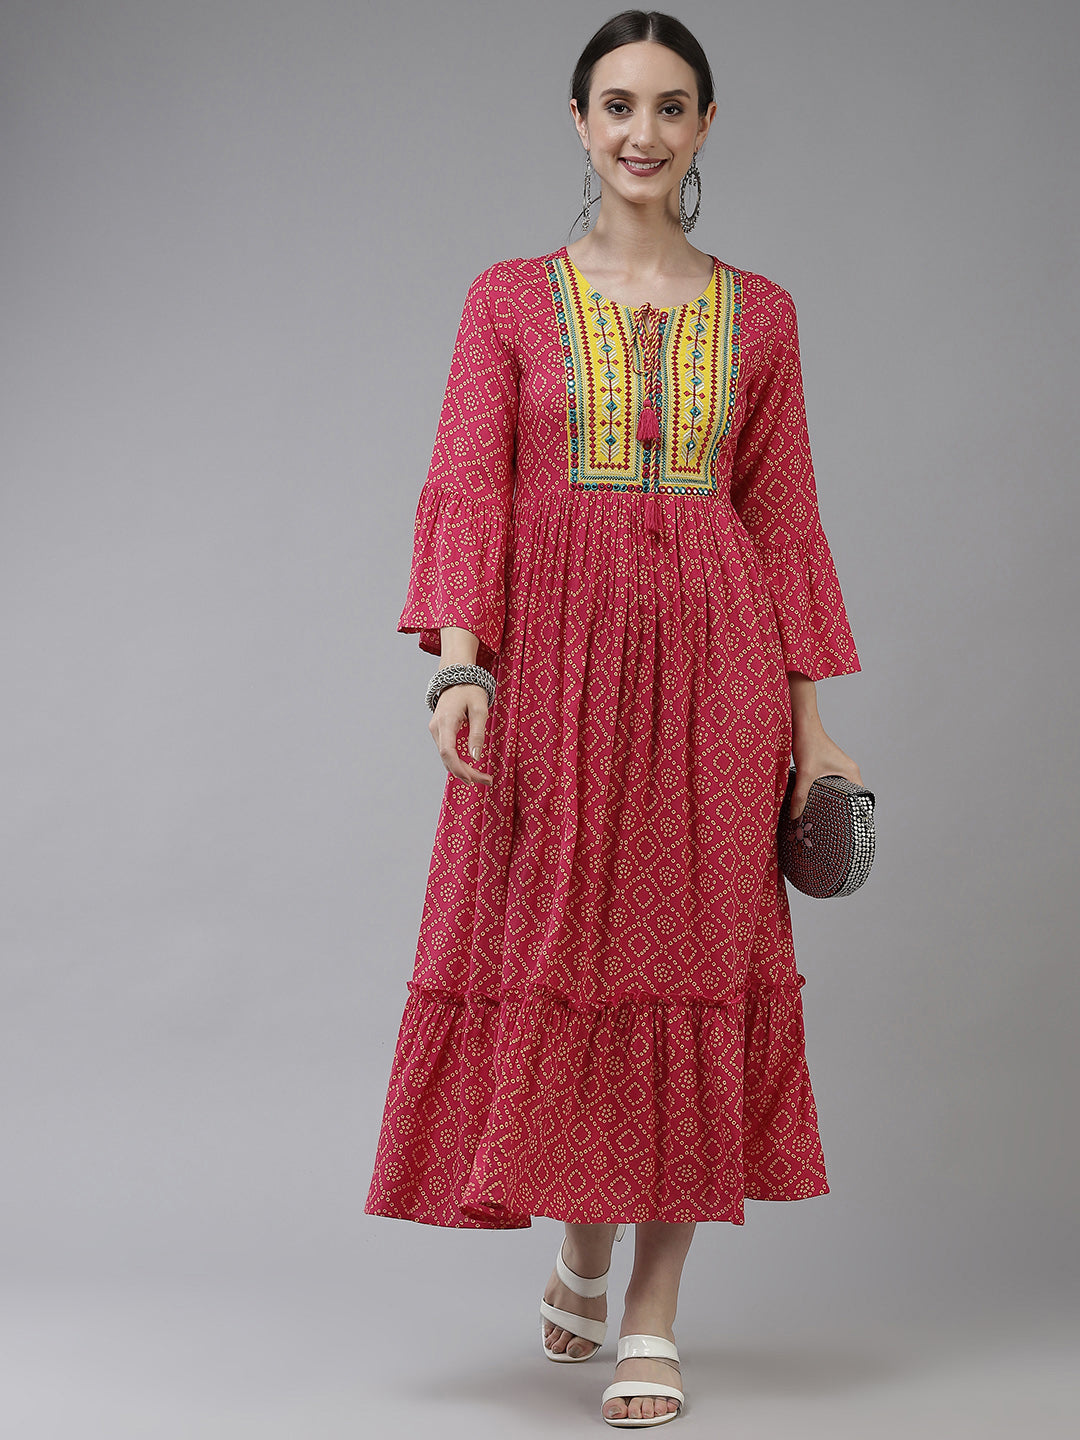 Pink & Yellow Ethnic Motifs Ethnic Dress Yufta Store